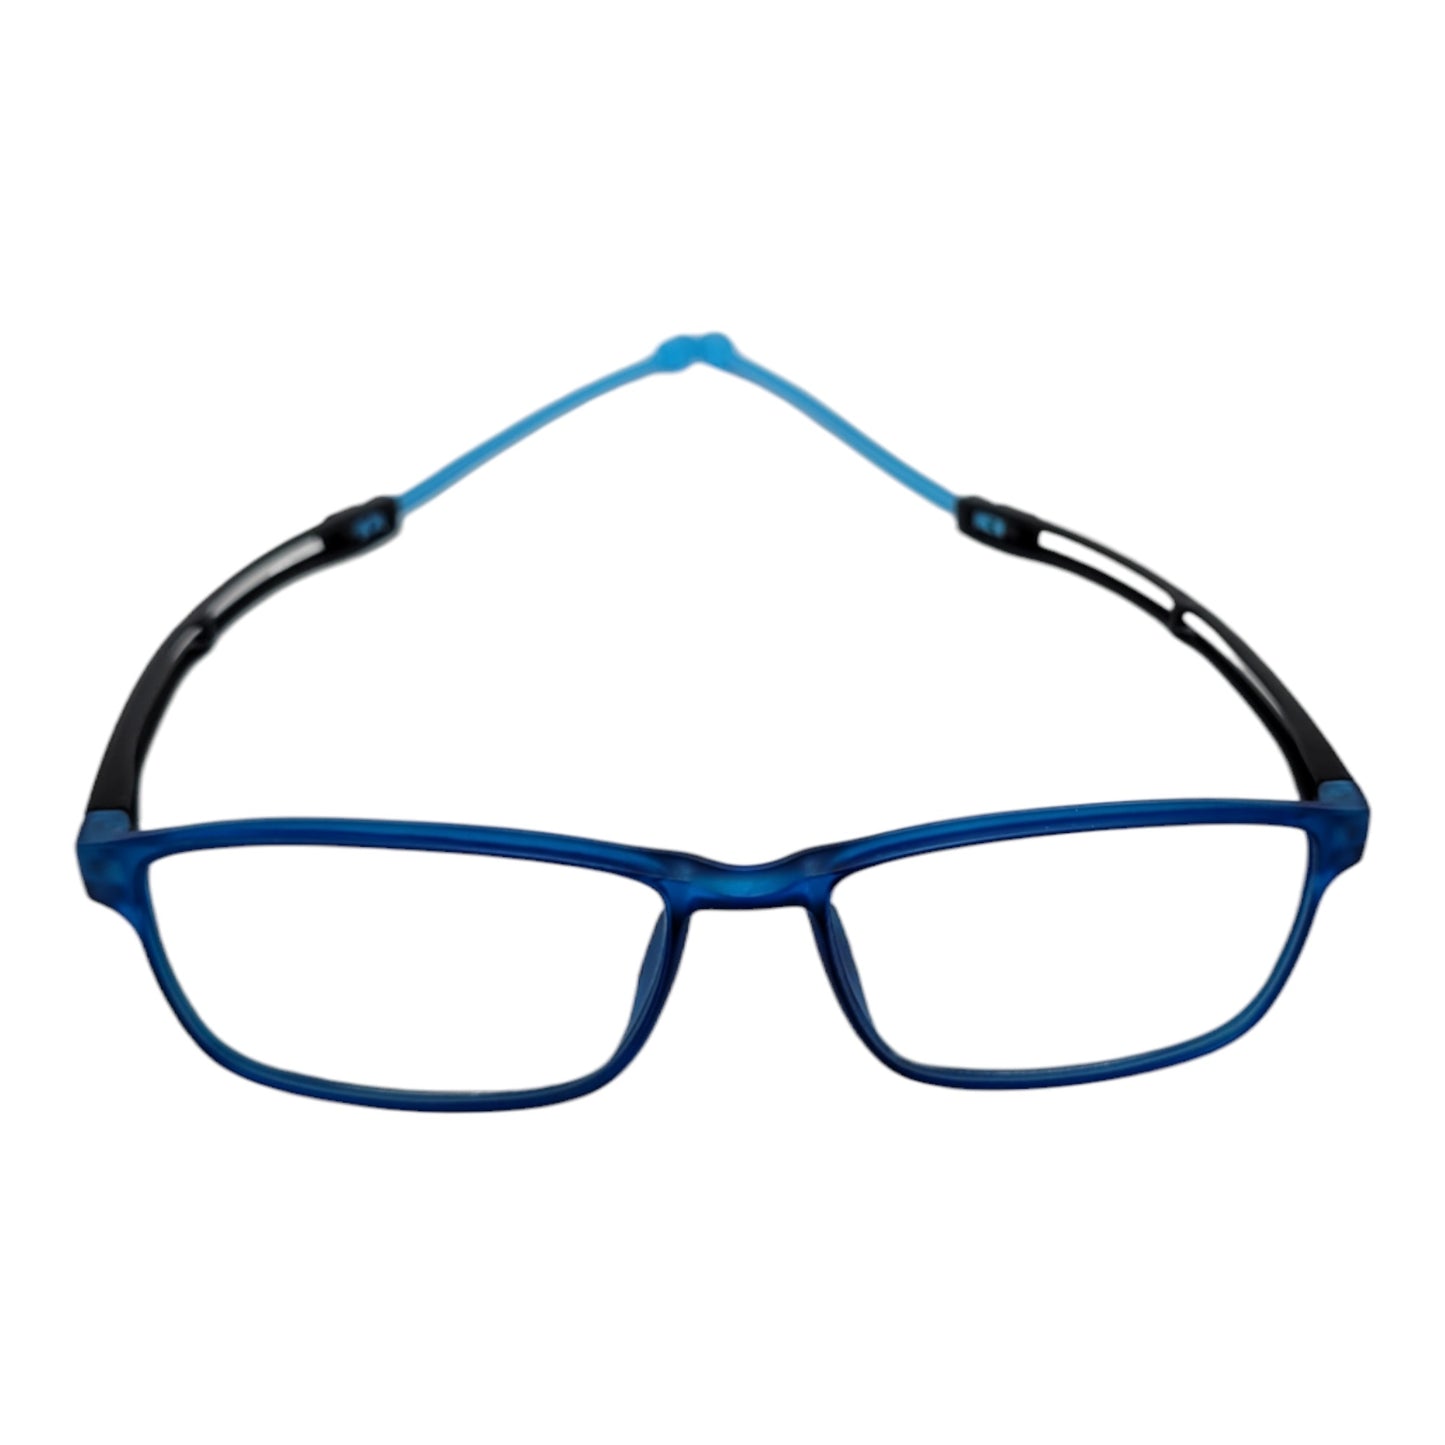 Affaires Magnetic Reading Glasses Full Rim Rectangular Unisex Spectacle Frame | Back Magnetic Connect Reader glasses | Color Blue